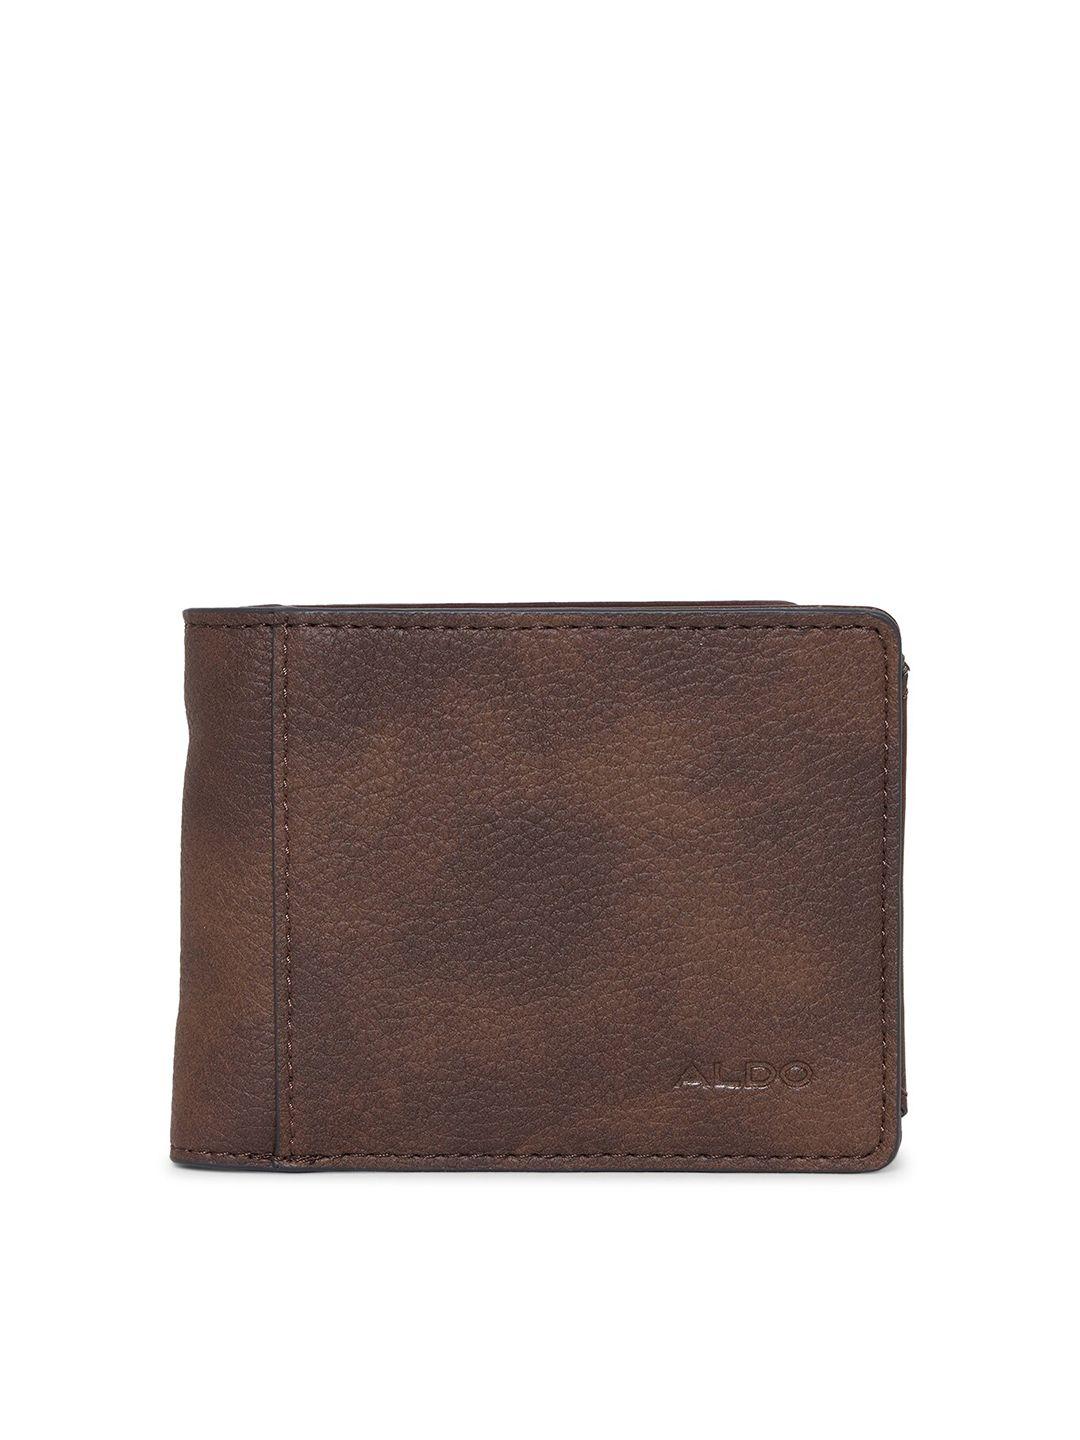 aldo-men-brown-two-fold-wallet